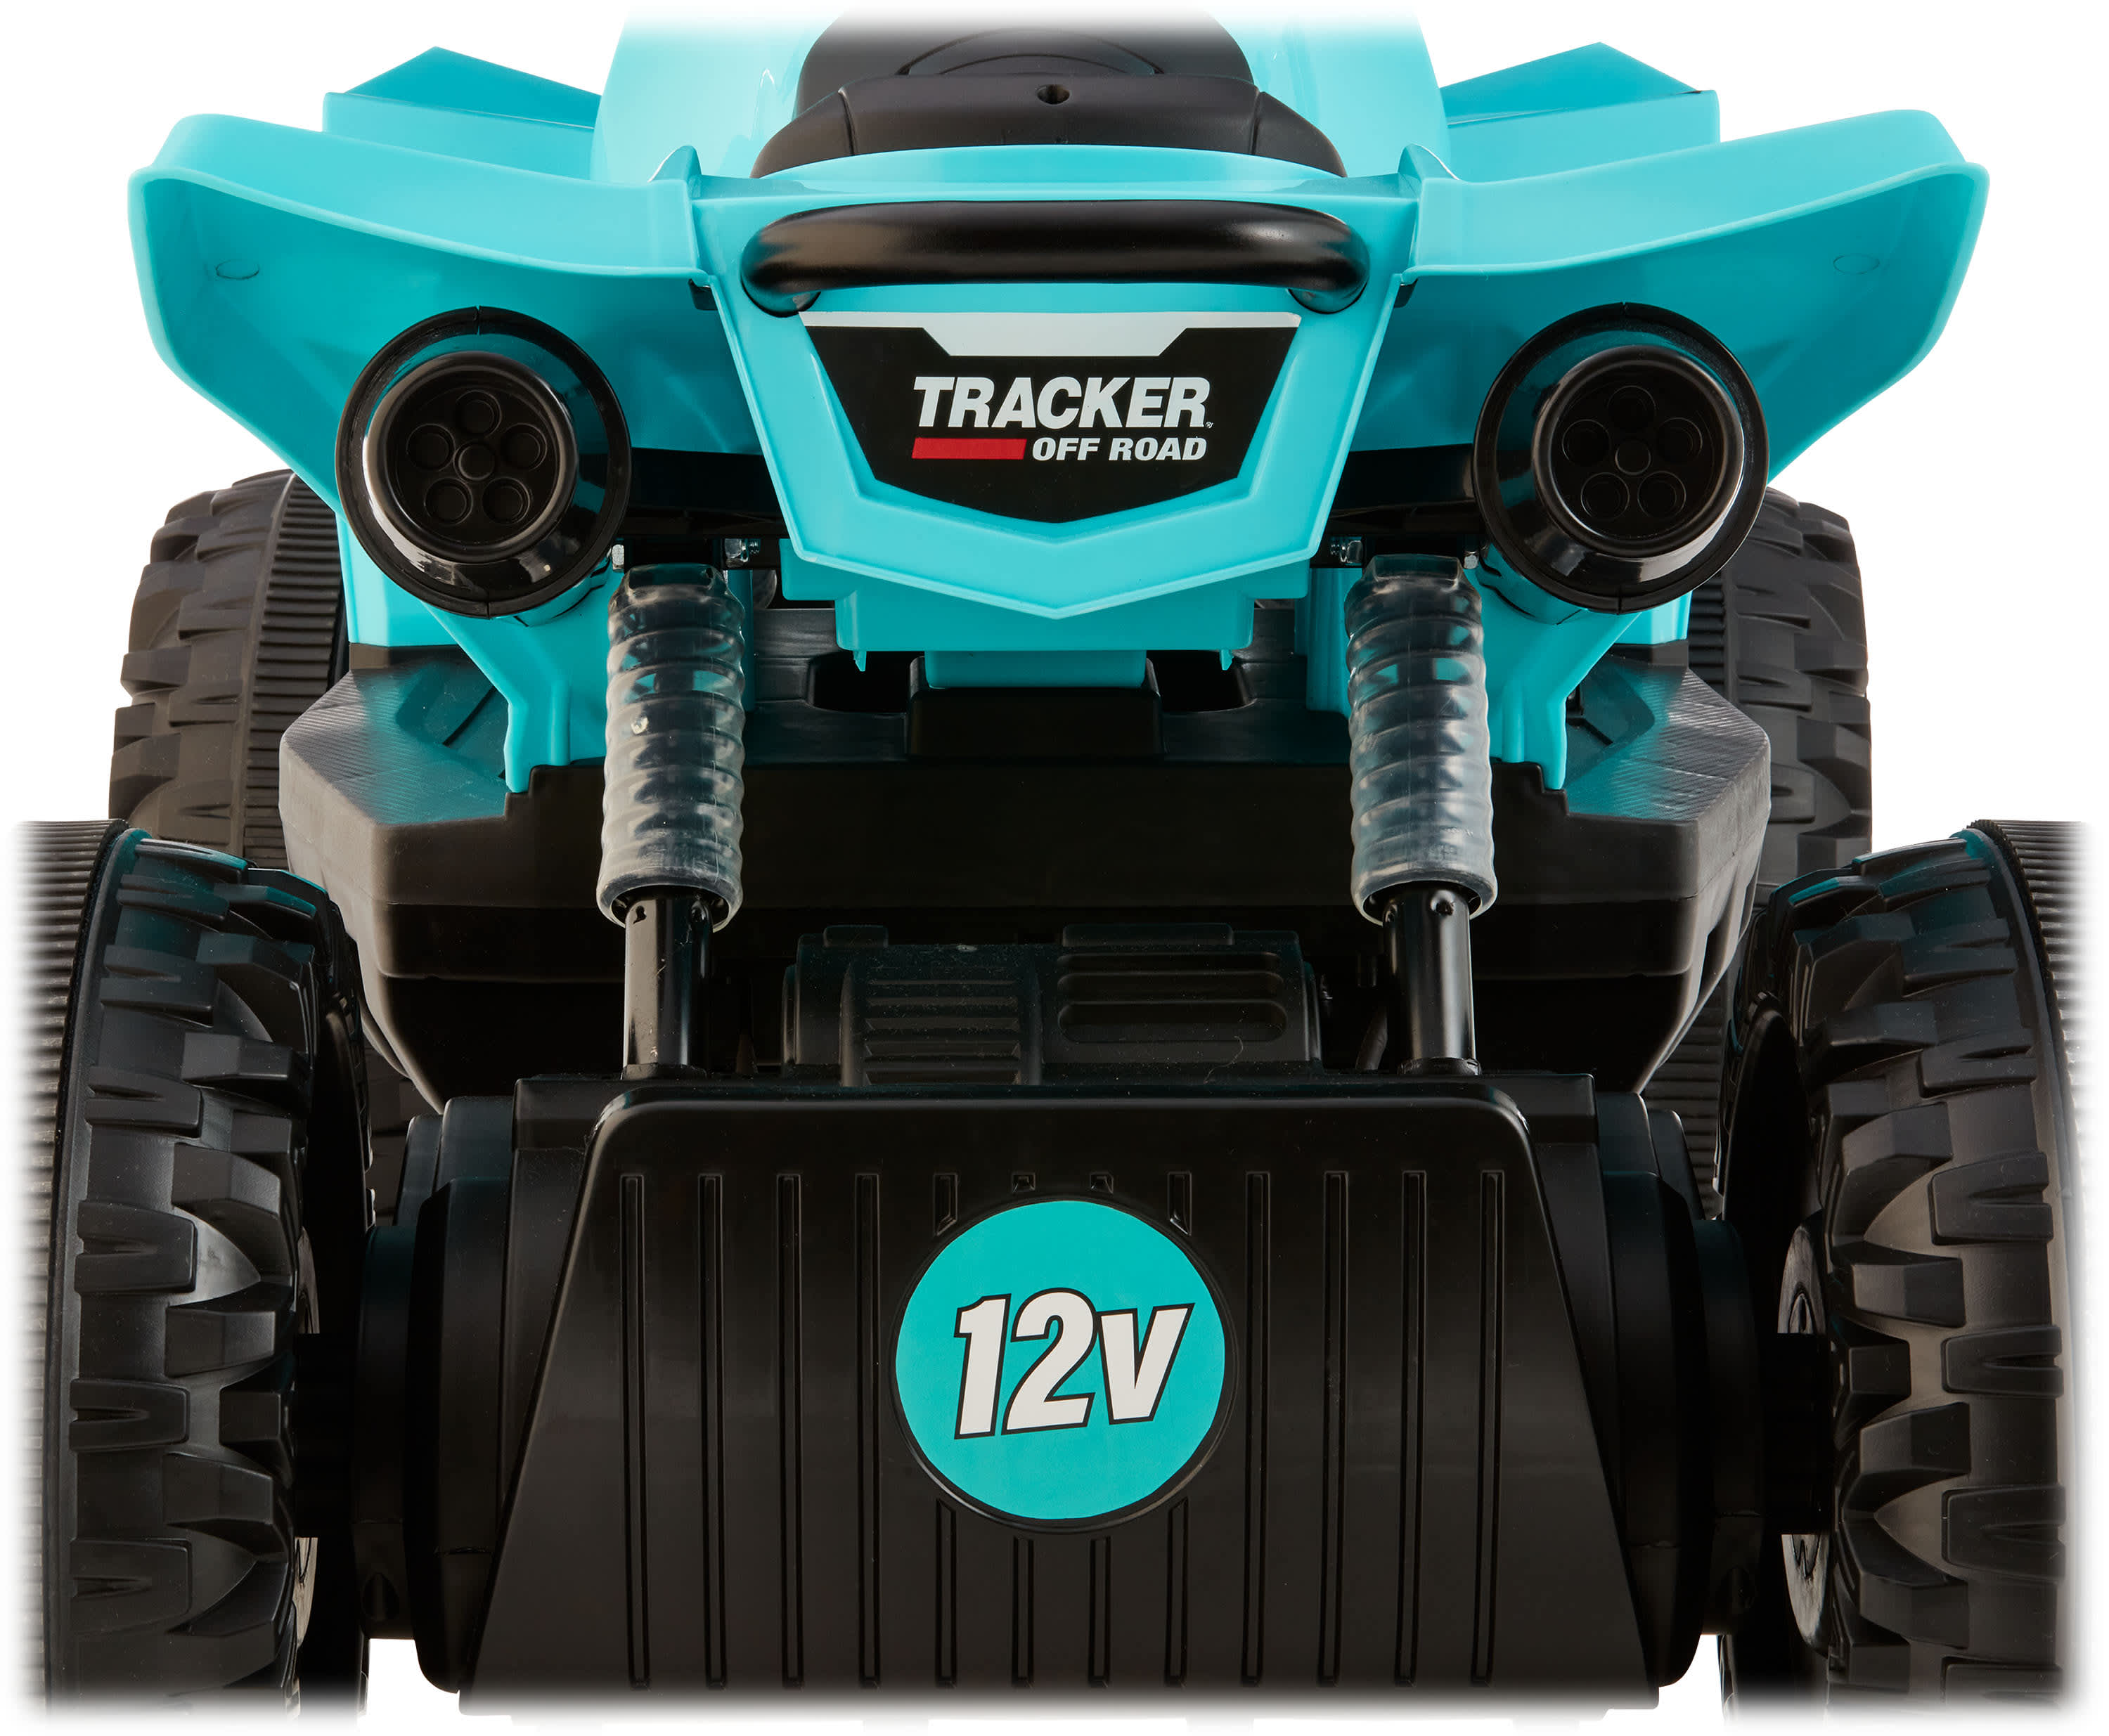 Bass Pro Shops® 12V Tracker® ATV Battery Ride-On Toy for Kids - Turquoise